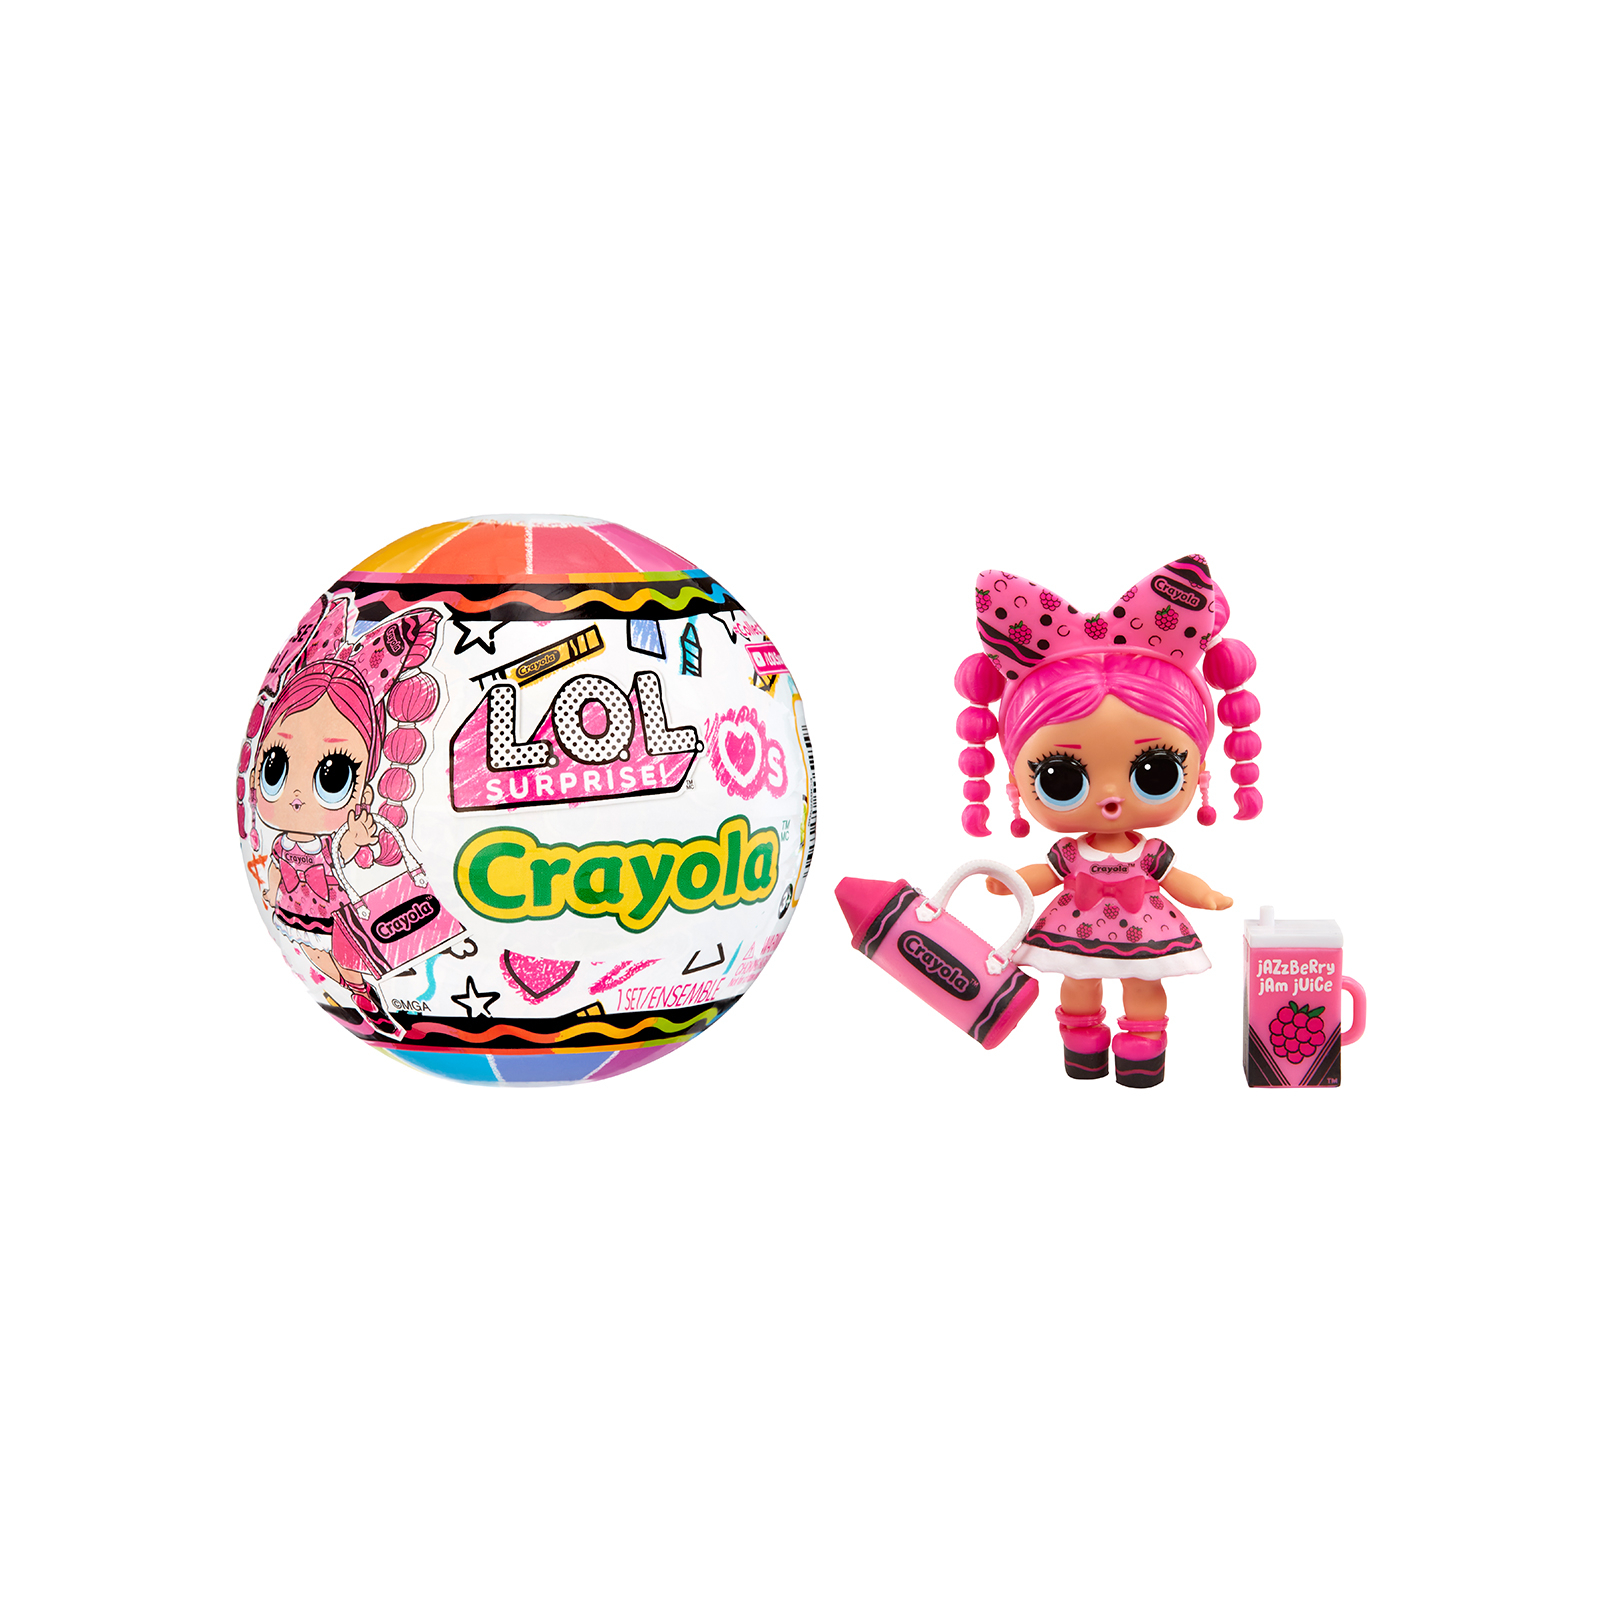 Кукла L.O.L. Surprise! серии Loves Crayola (505259)